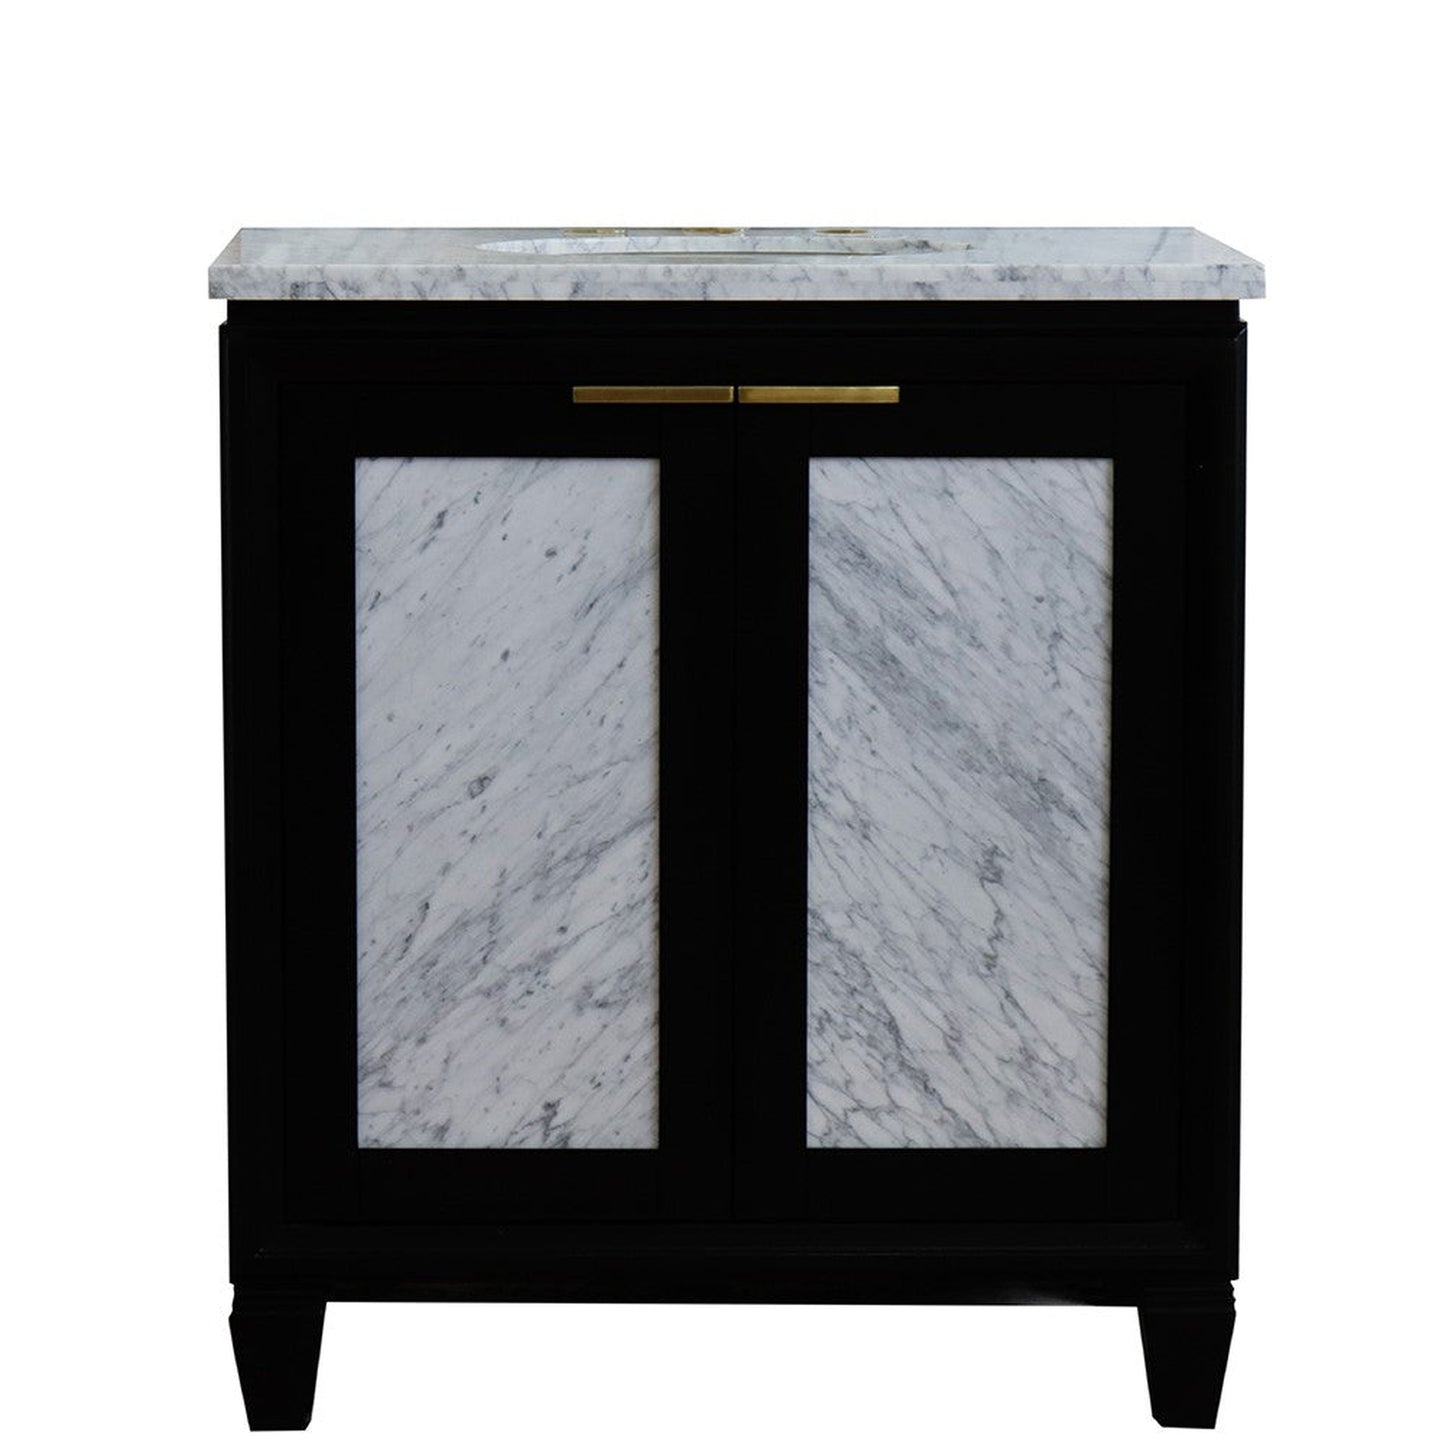 Bellaterra Home Trento 31" 2-Door 1-Drawer Black Freestanding Vanity Set With Ceramic Undermount Oval Sink and White Carrara Marble Top